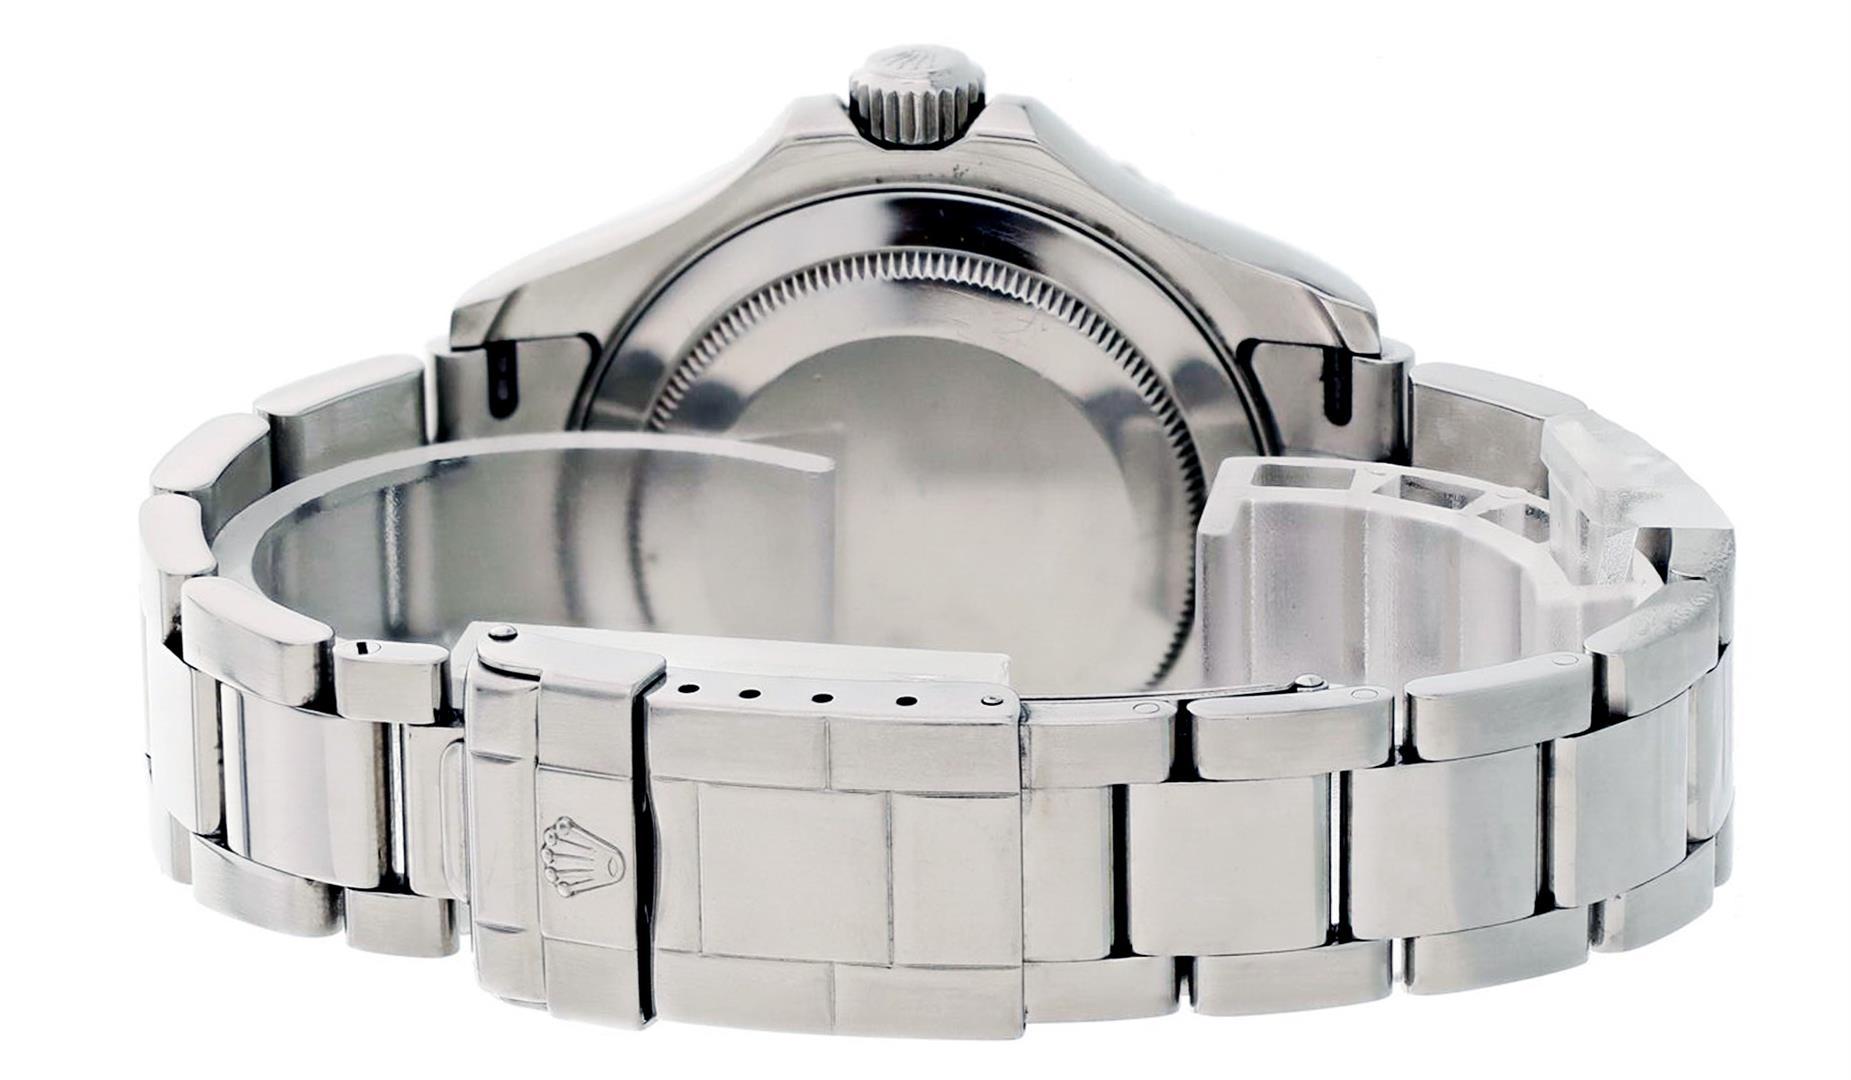 Rolex Mens Stainless Steel Platinum Dial 40MM Yacht Master Wristwatch